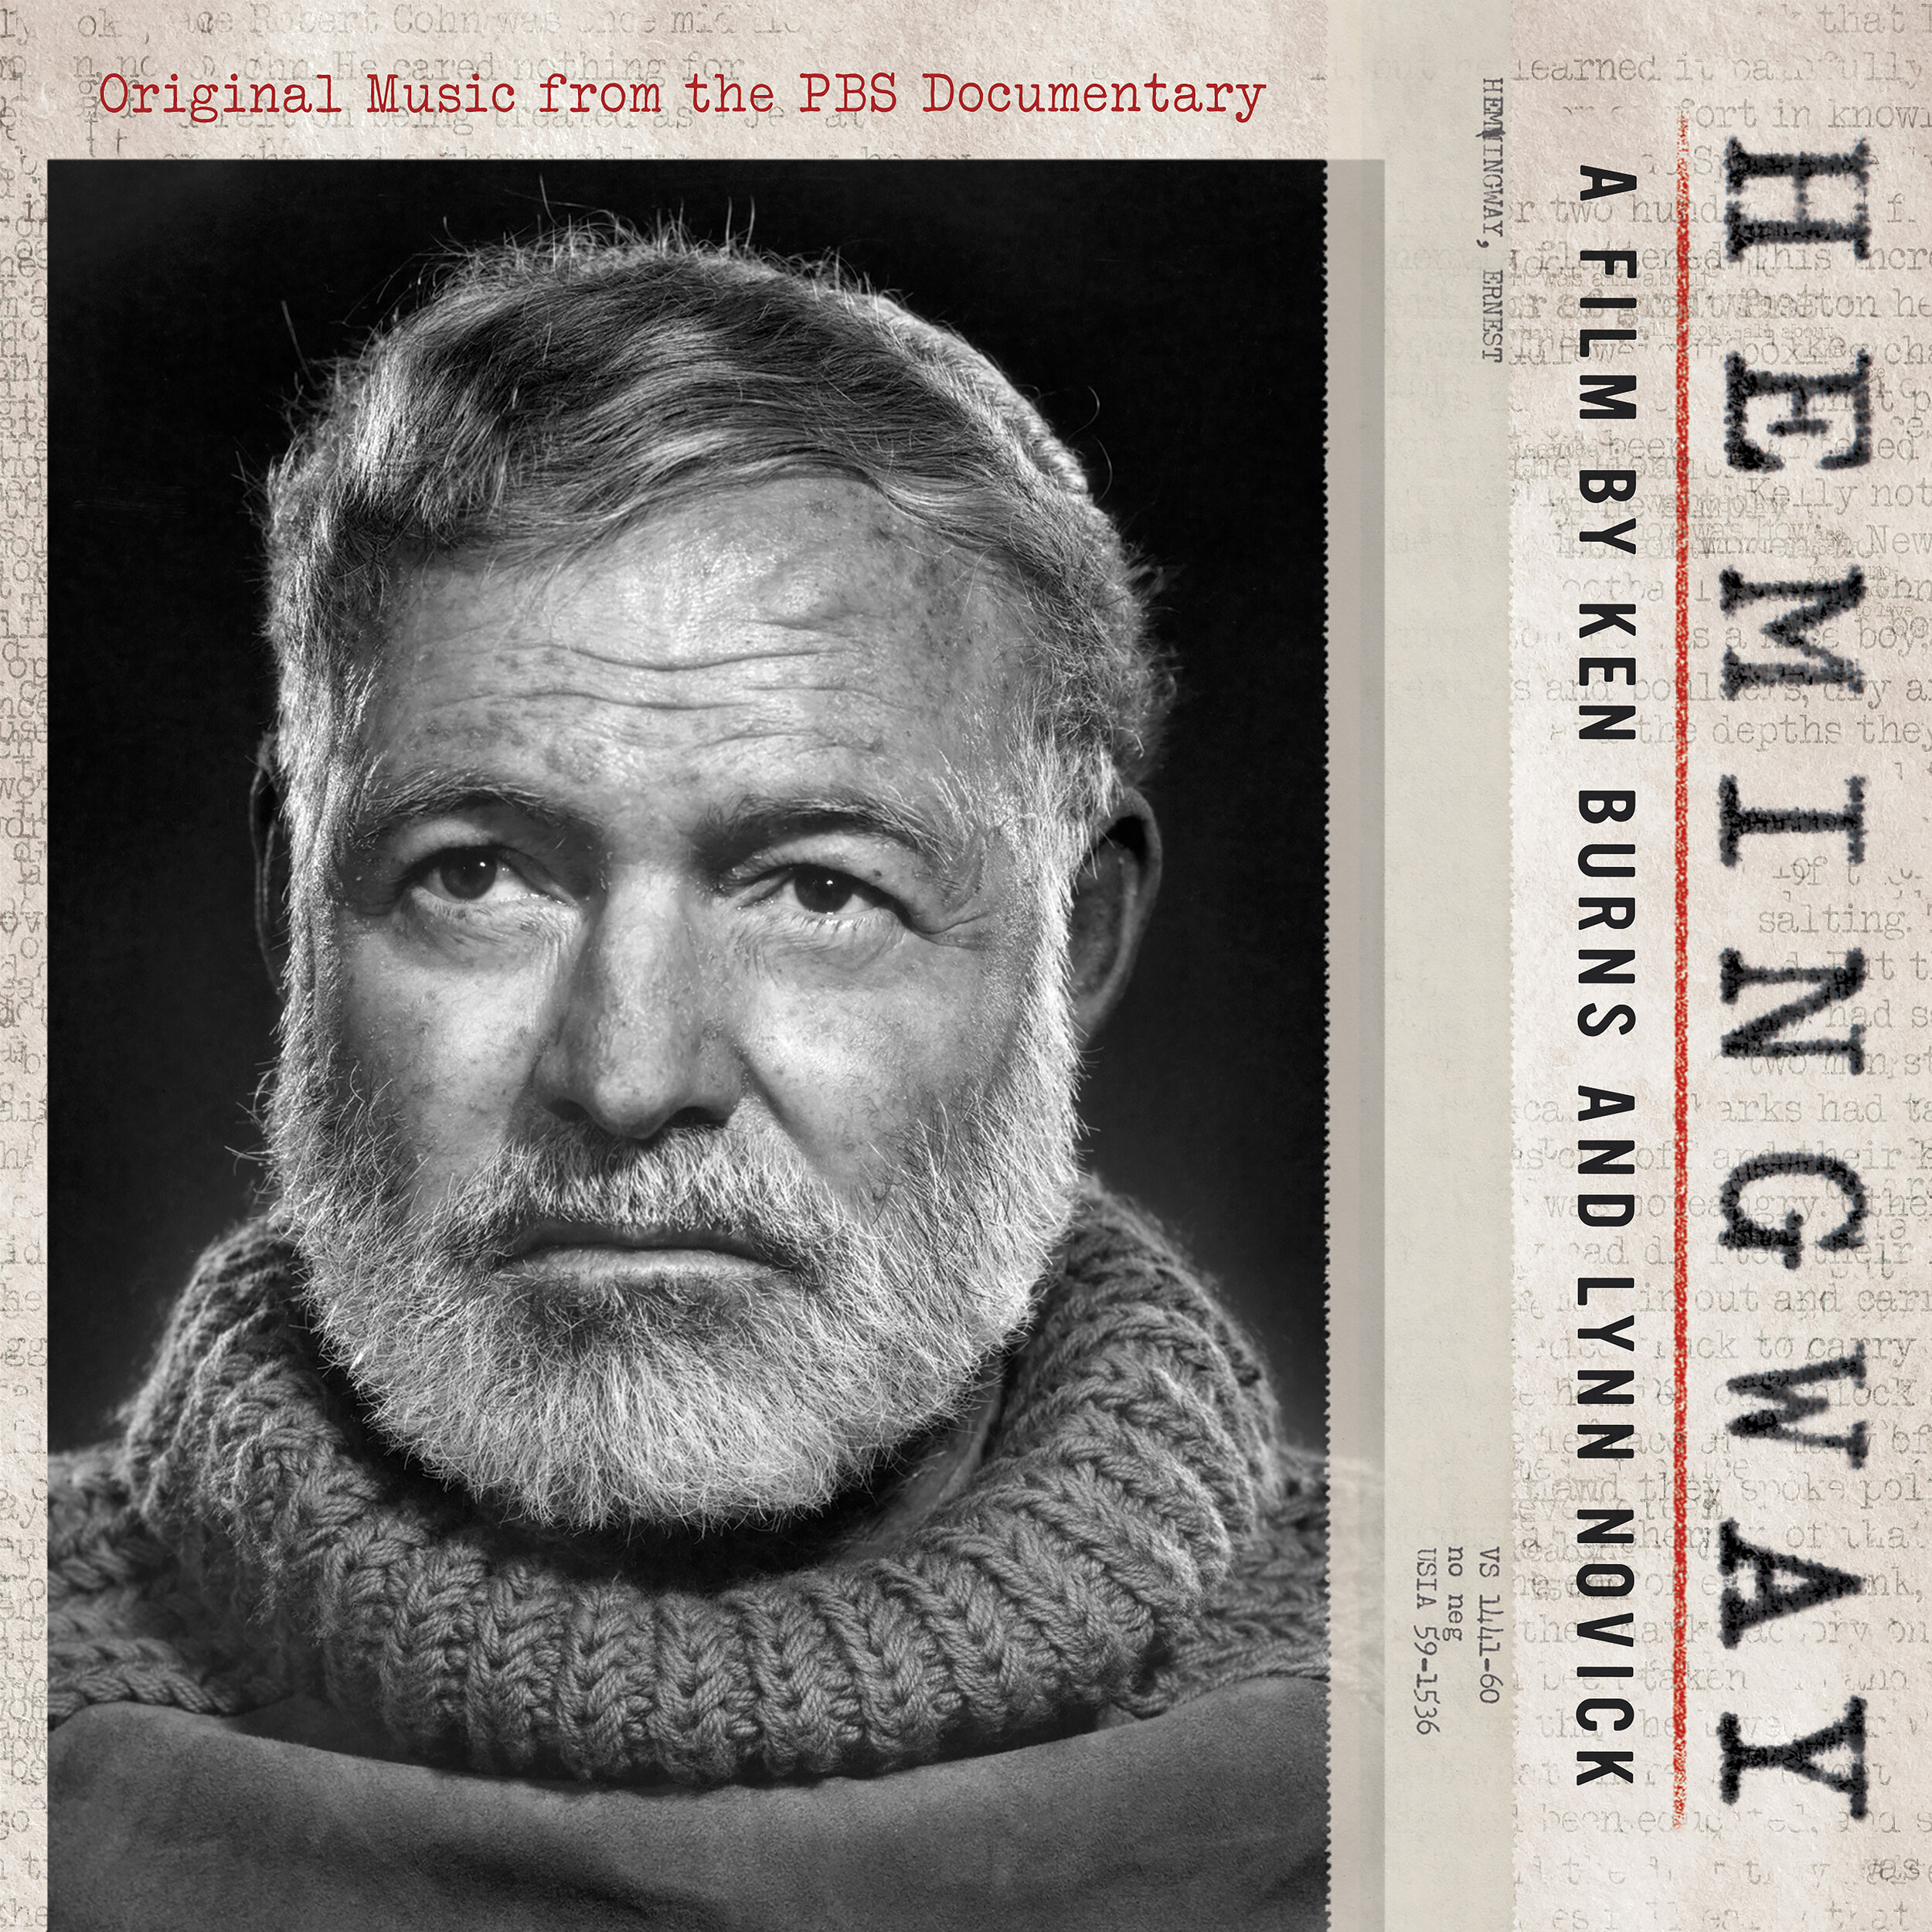 Hemingway - A Film by Ken Burns & Lynn Novick, Original Music From the PBS Documentary